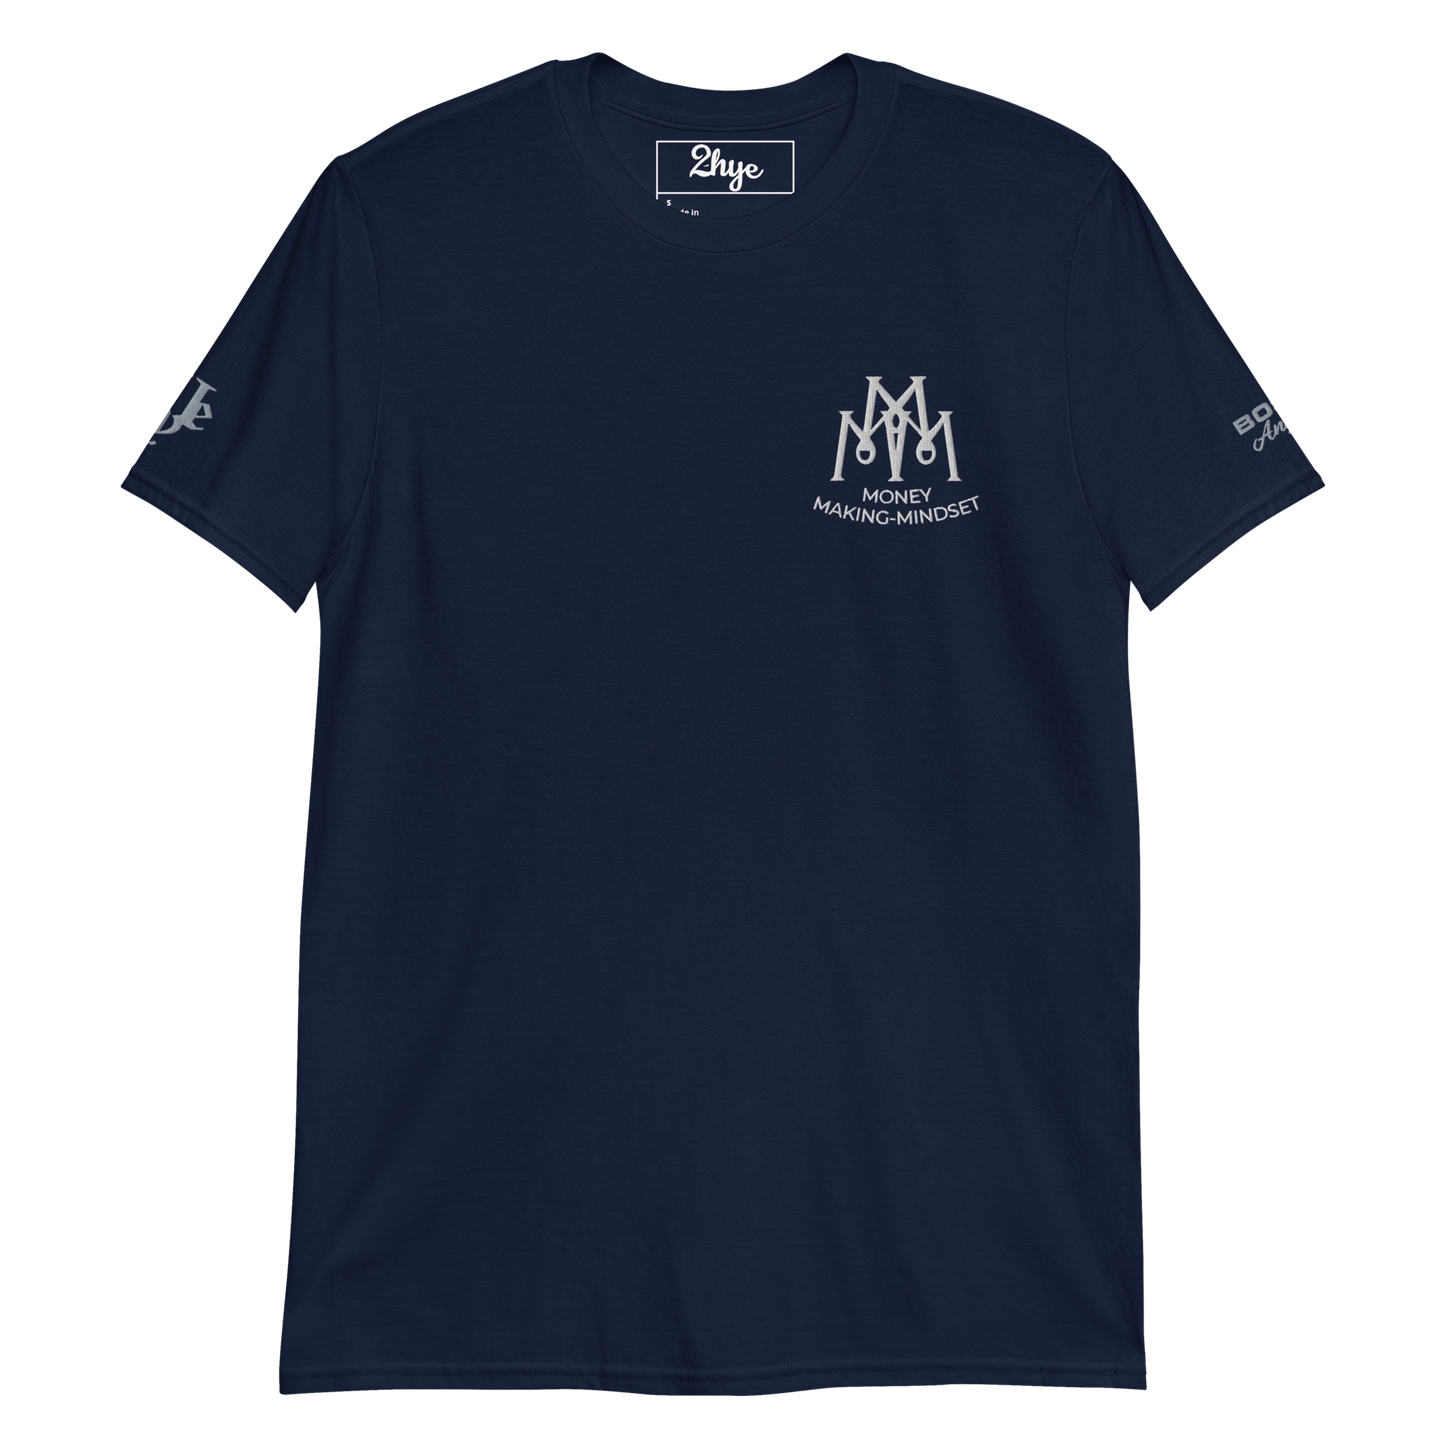 2-Hye: Triple M Shirt (Unisex)